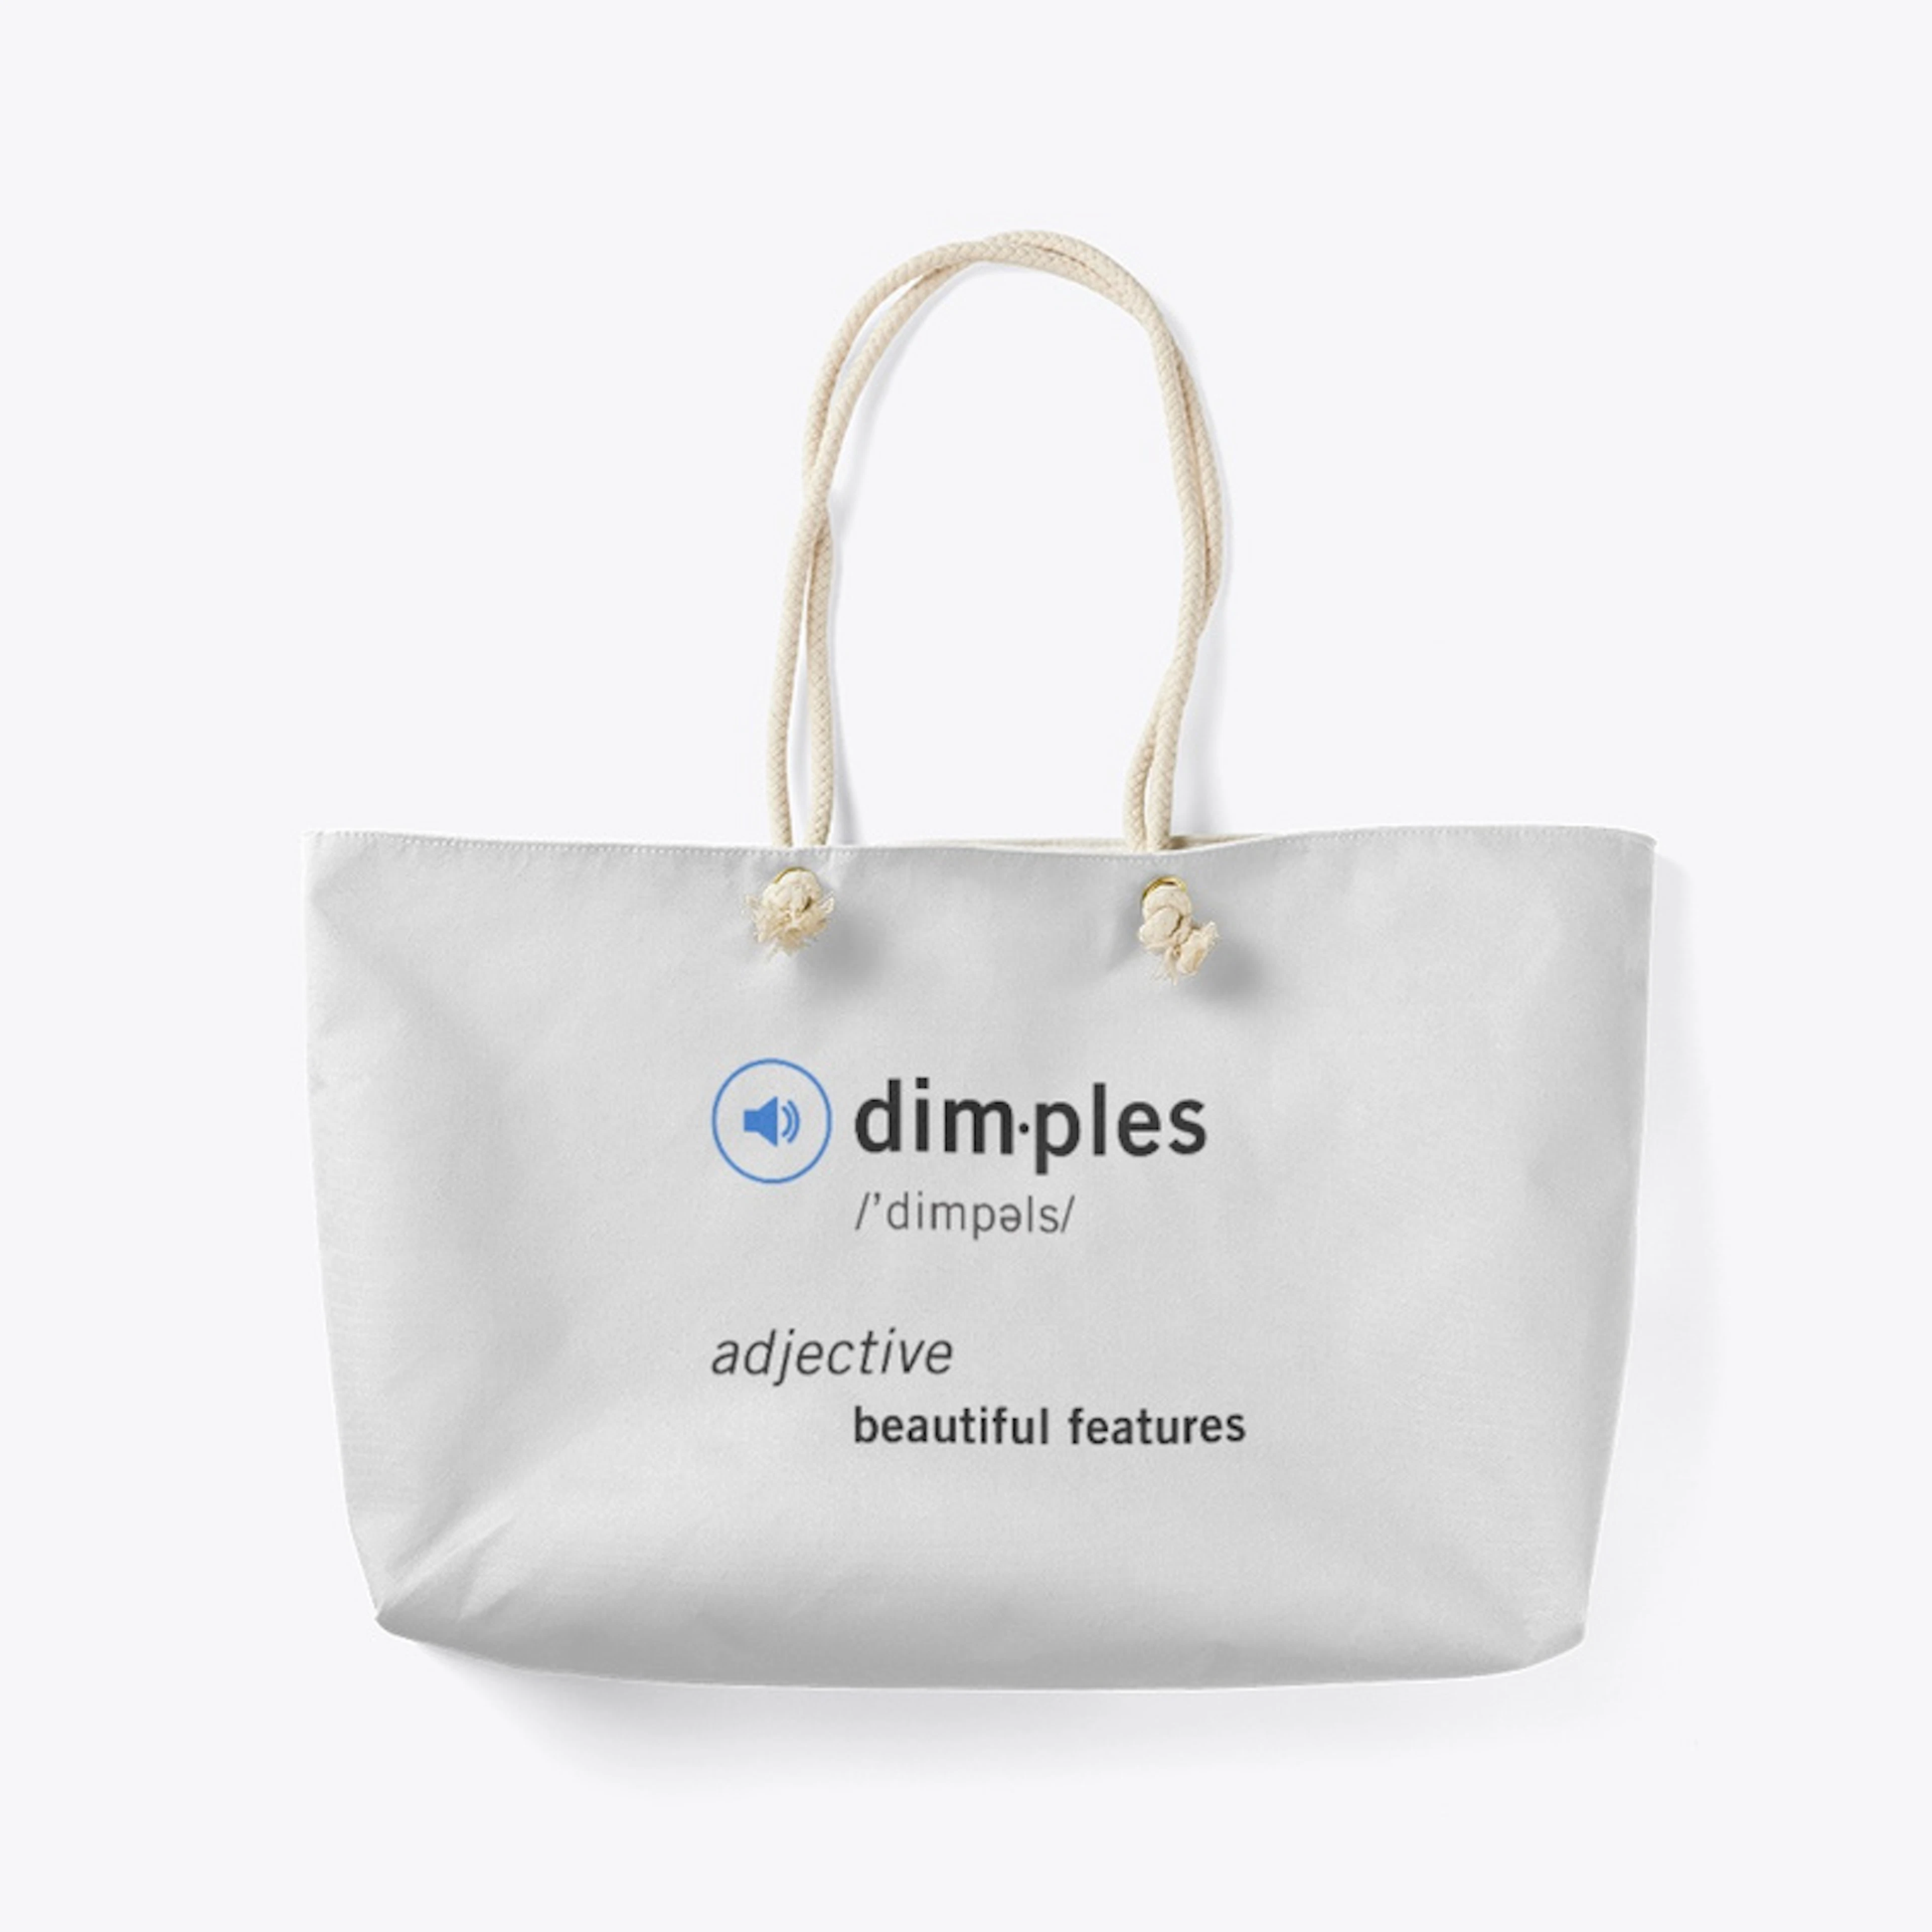 Dimples definition